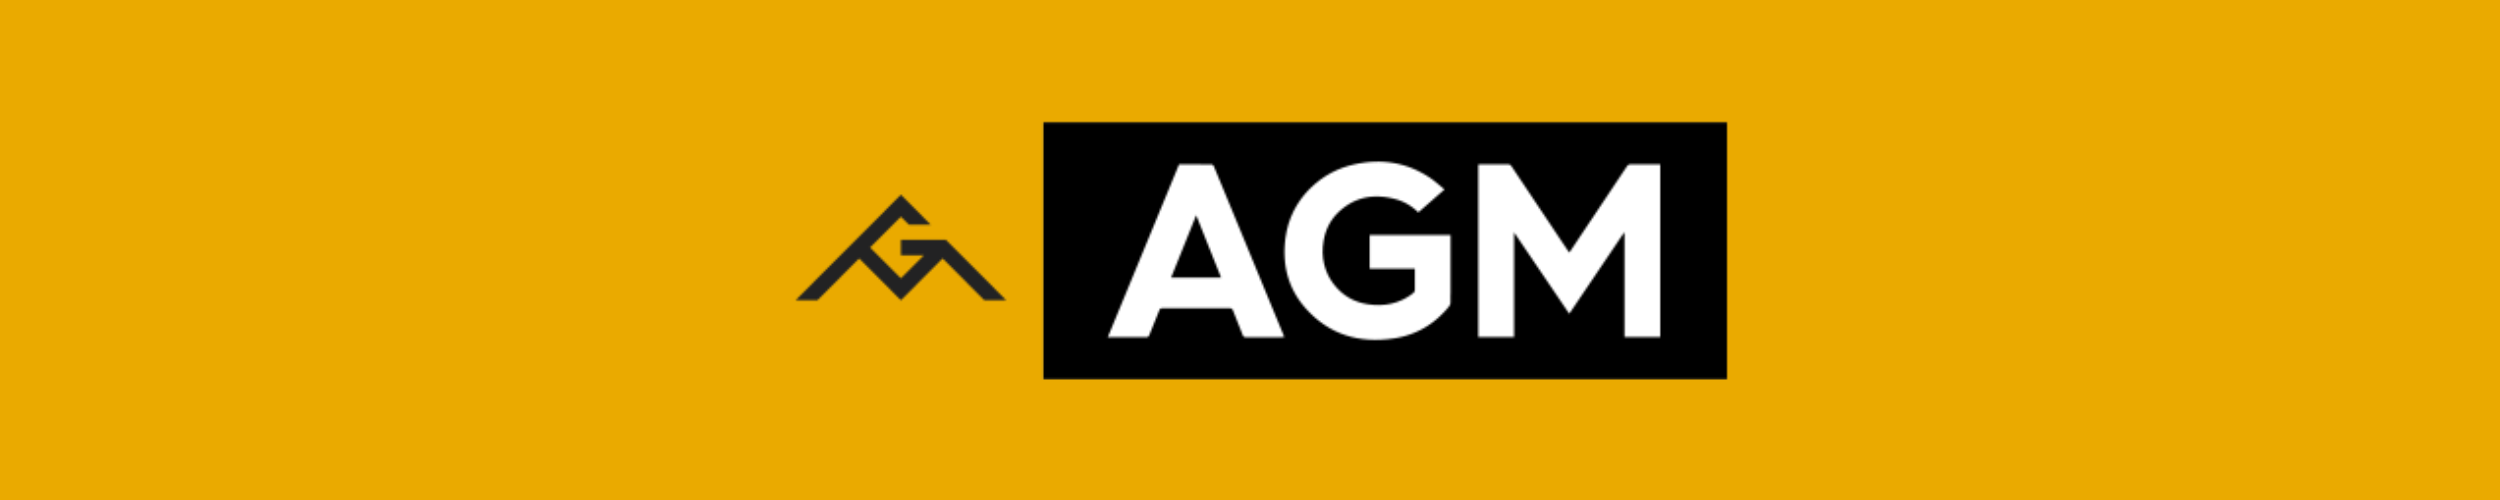 AGM Mobile Logo